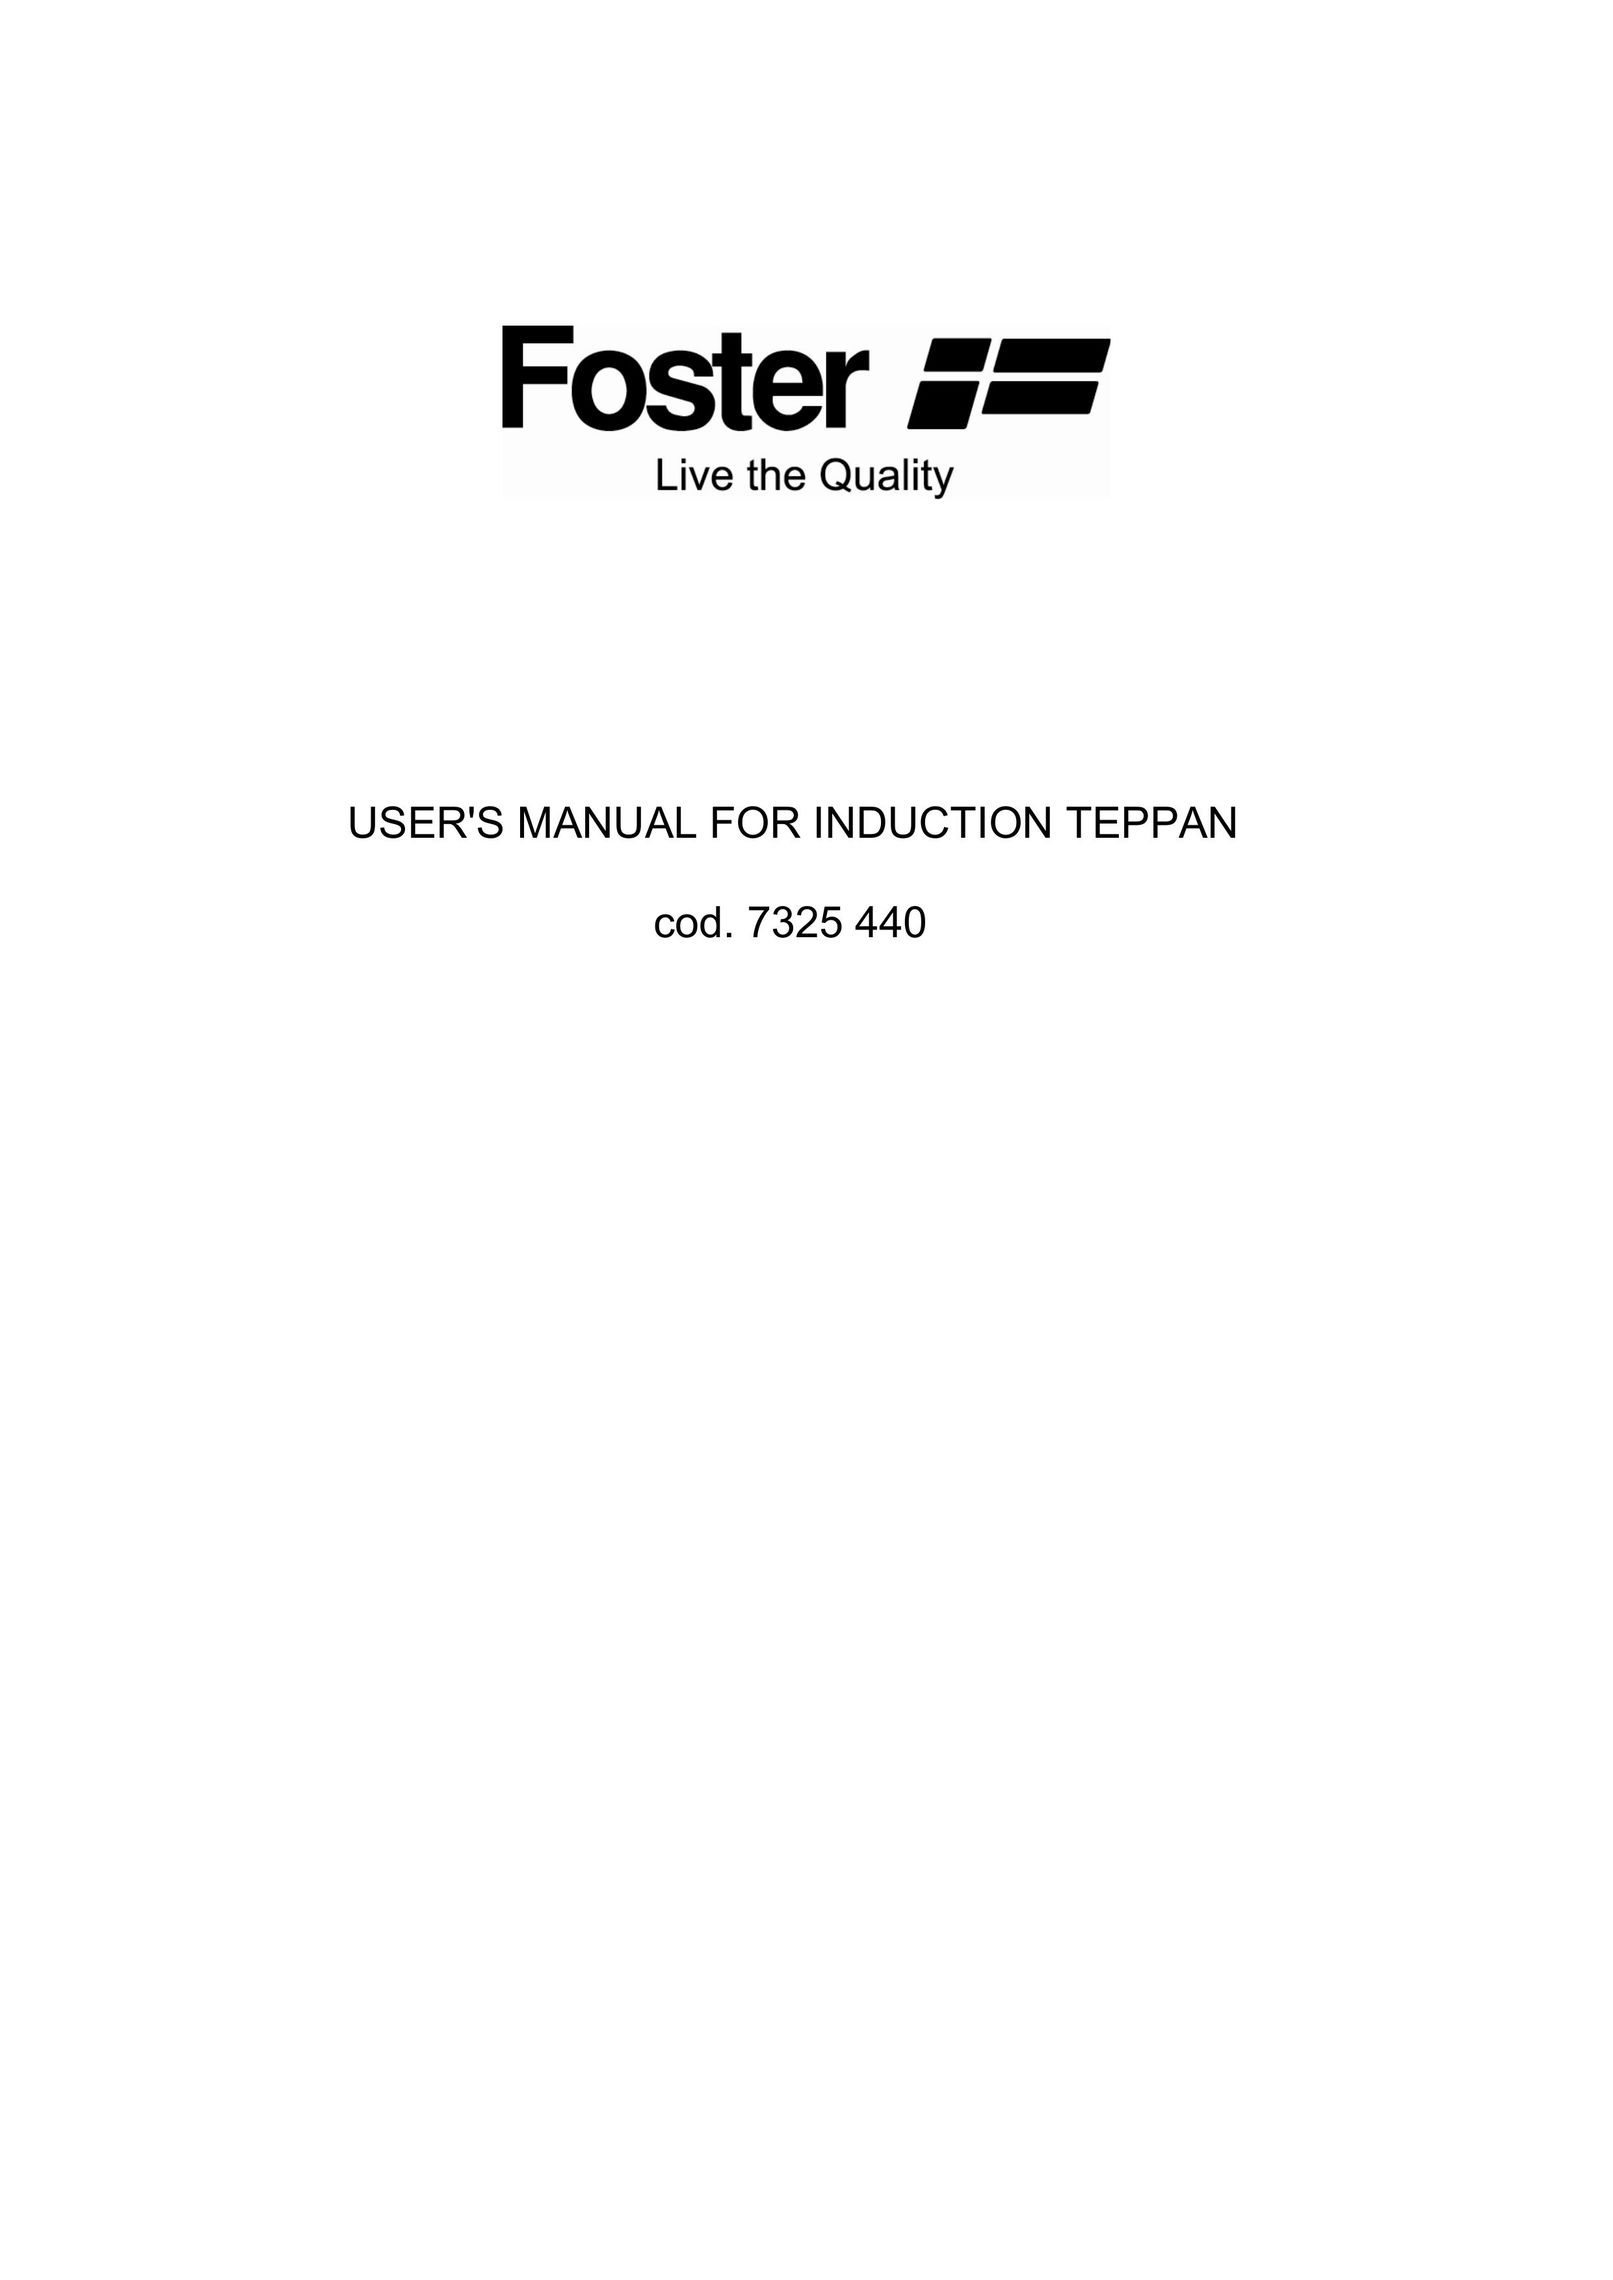 Foster 7325 440 Two-Way Radio User Manual